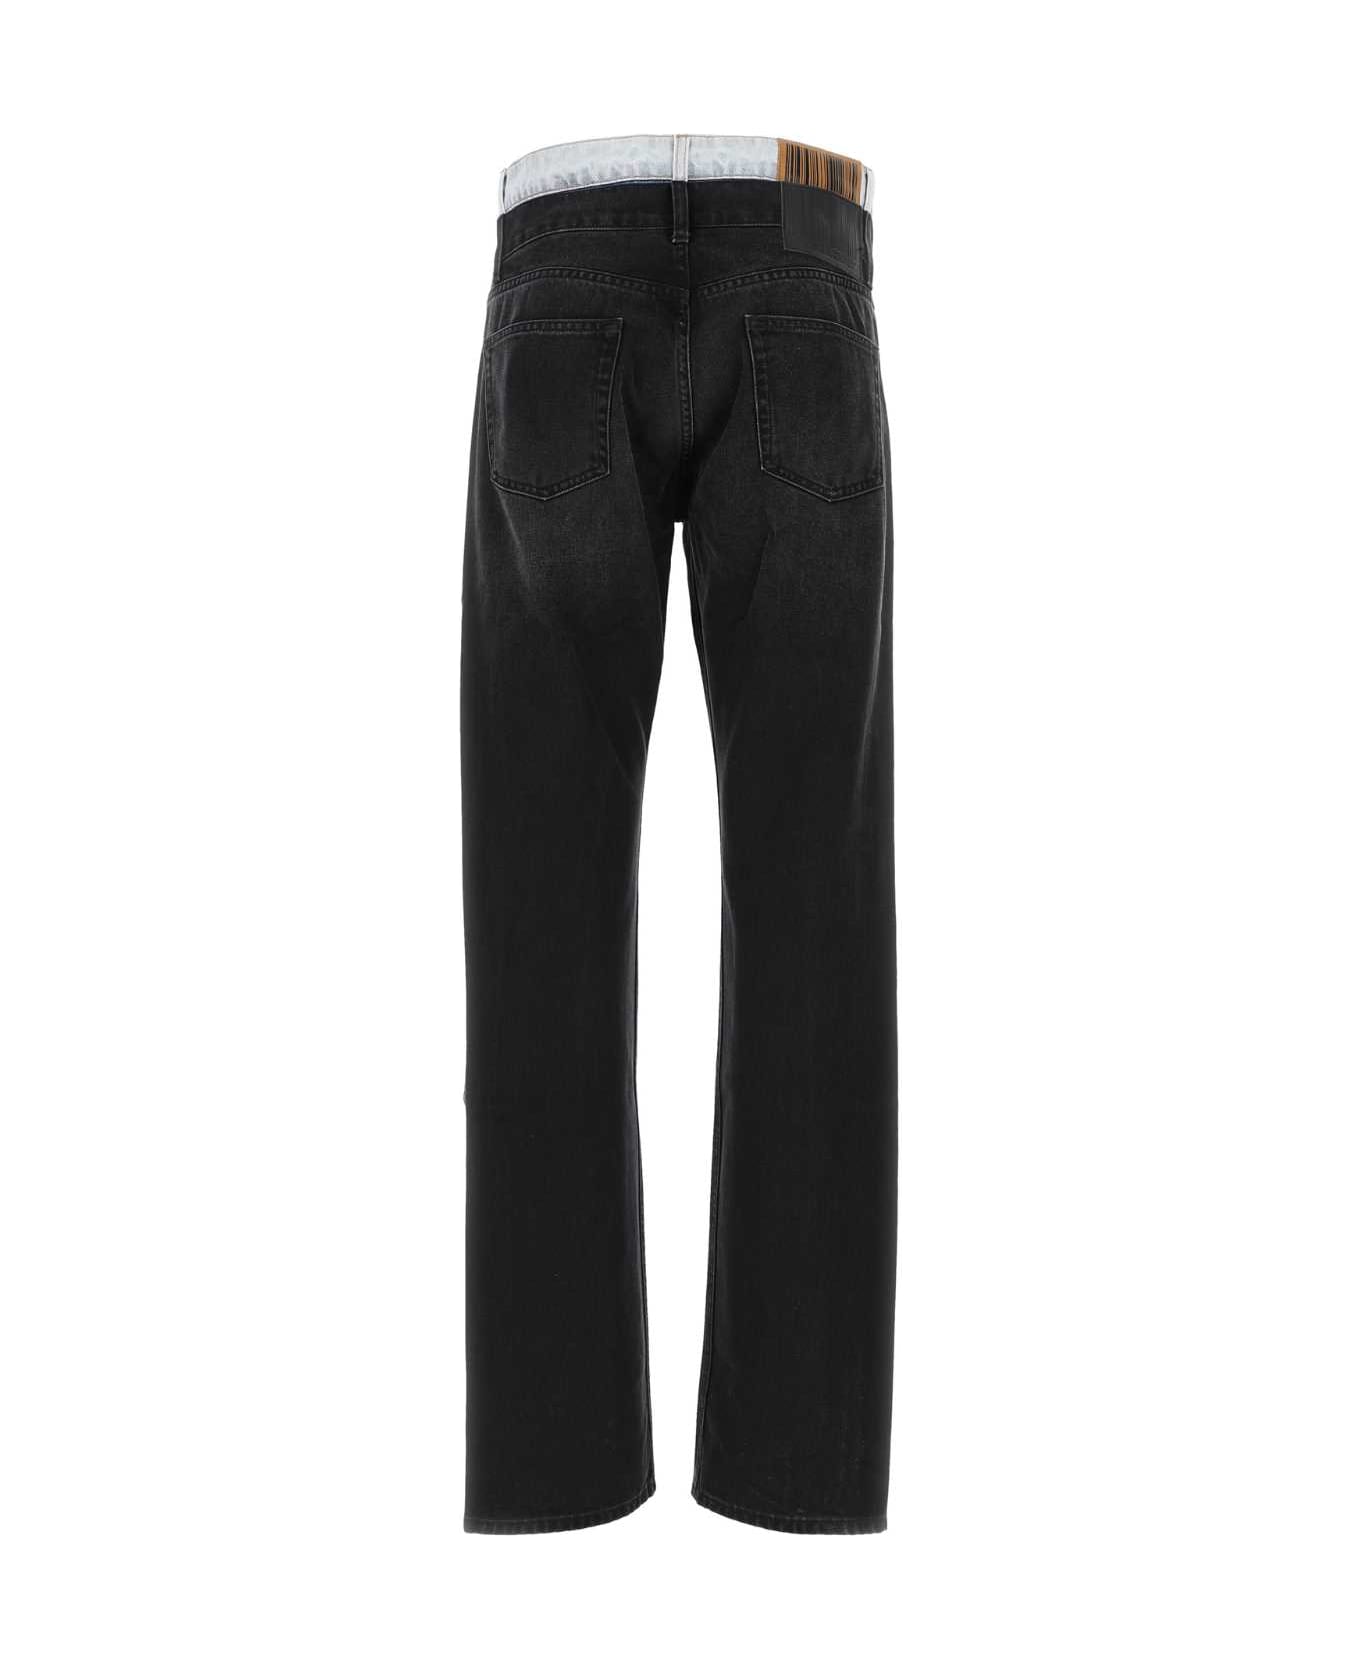 VTMNTS Black Denim Jeans - BLACKLIGHTBLUE